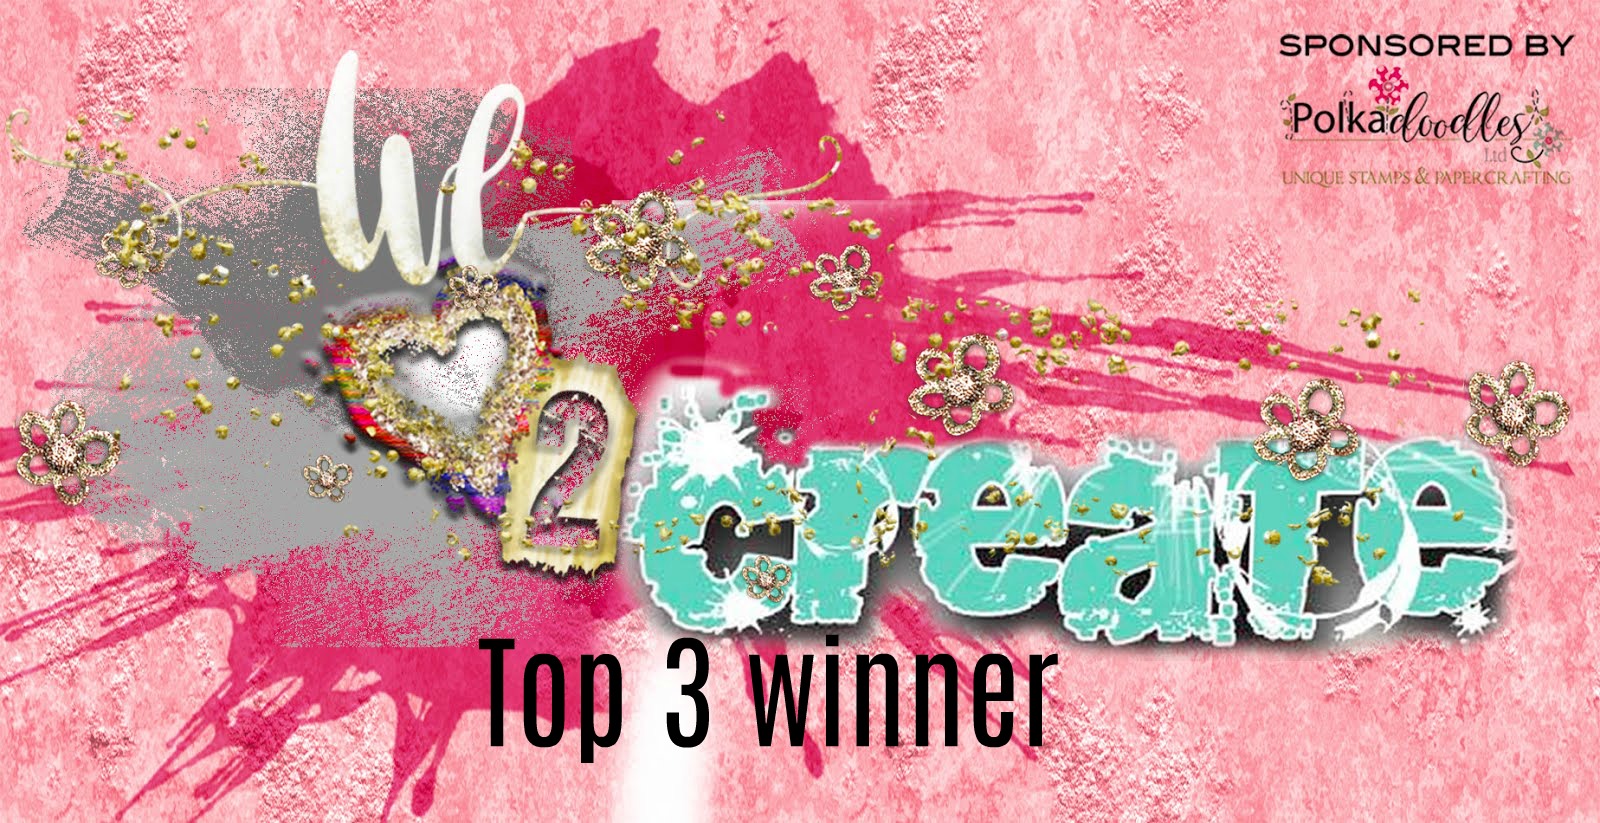 Top 3 WINNERS for we love 2 create